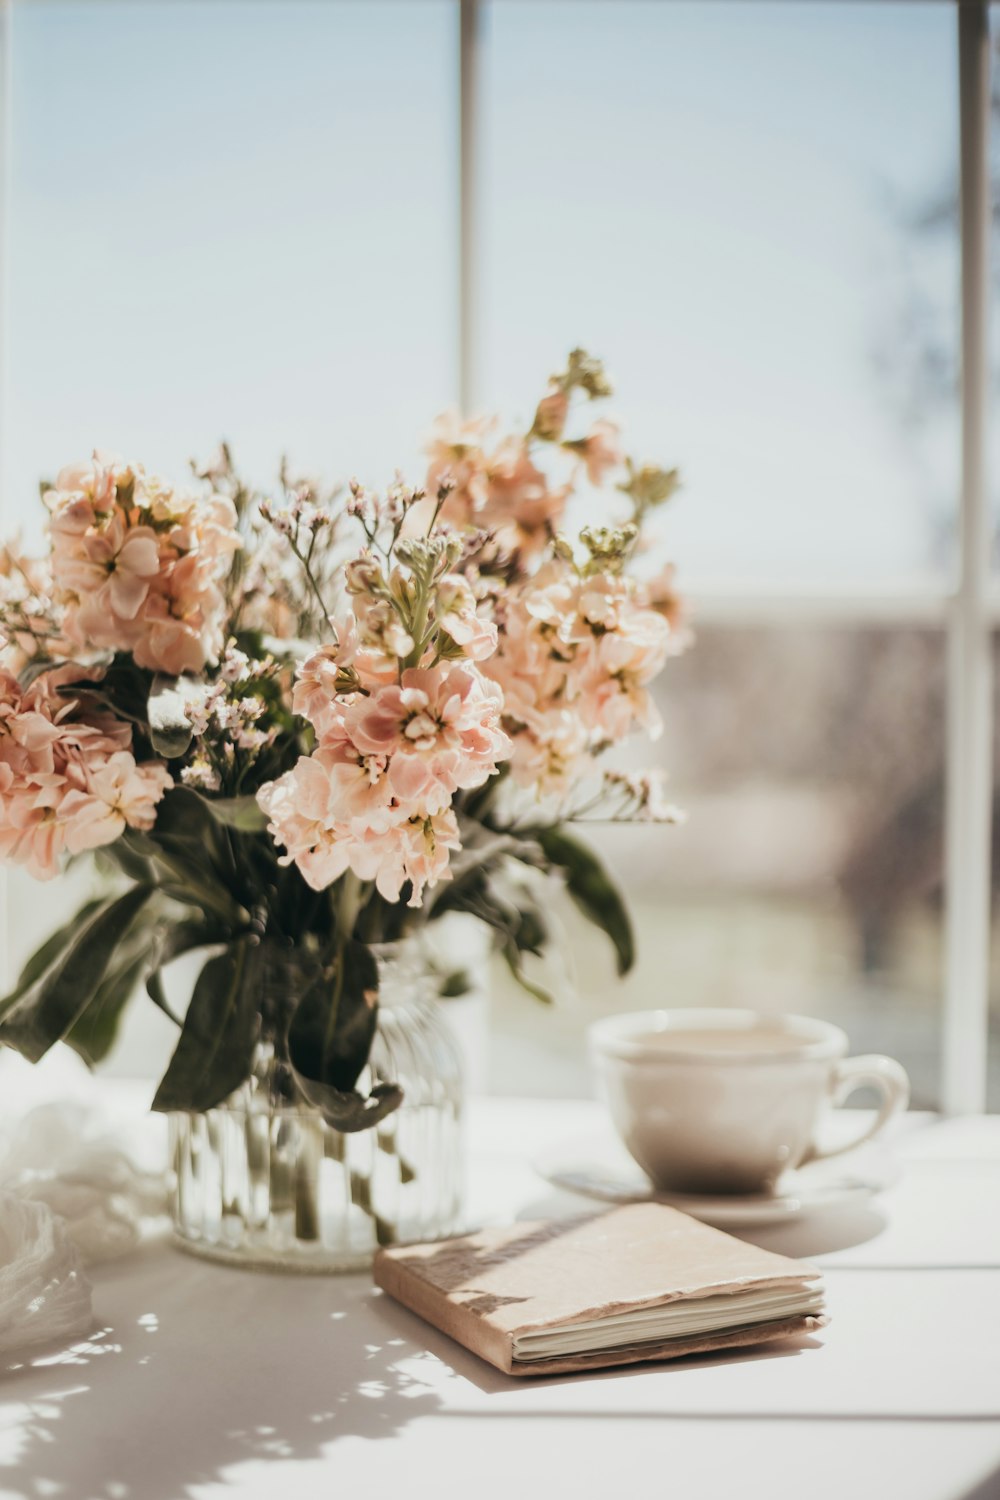 flores brancas e cor-de-rosa na xícara de chá de cerâmica branca na mesa branca